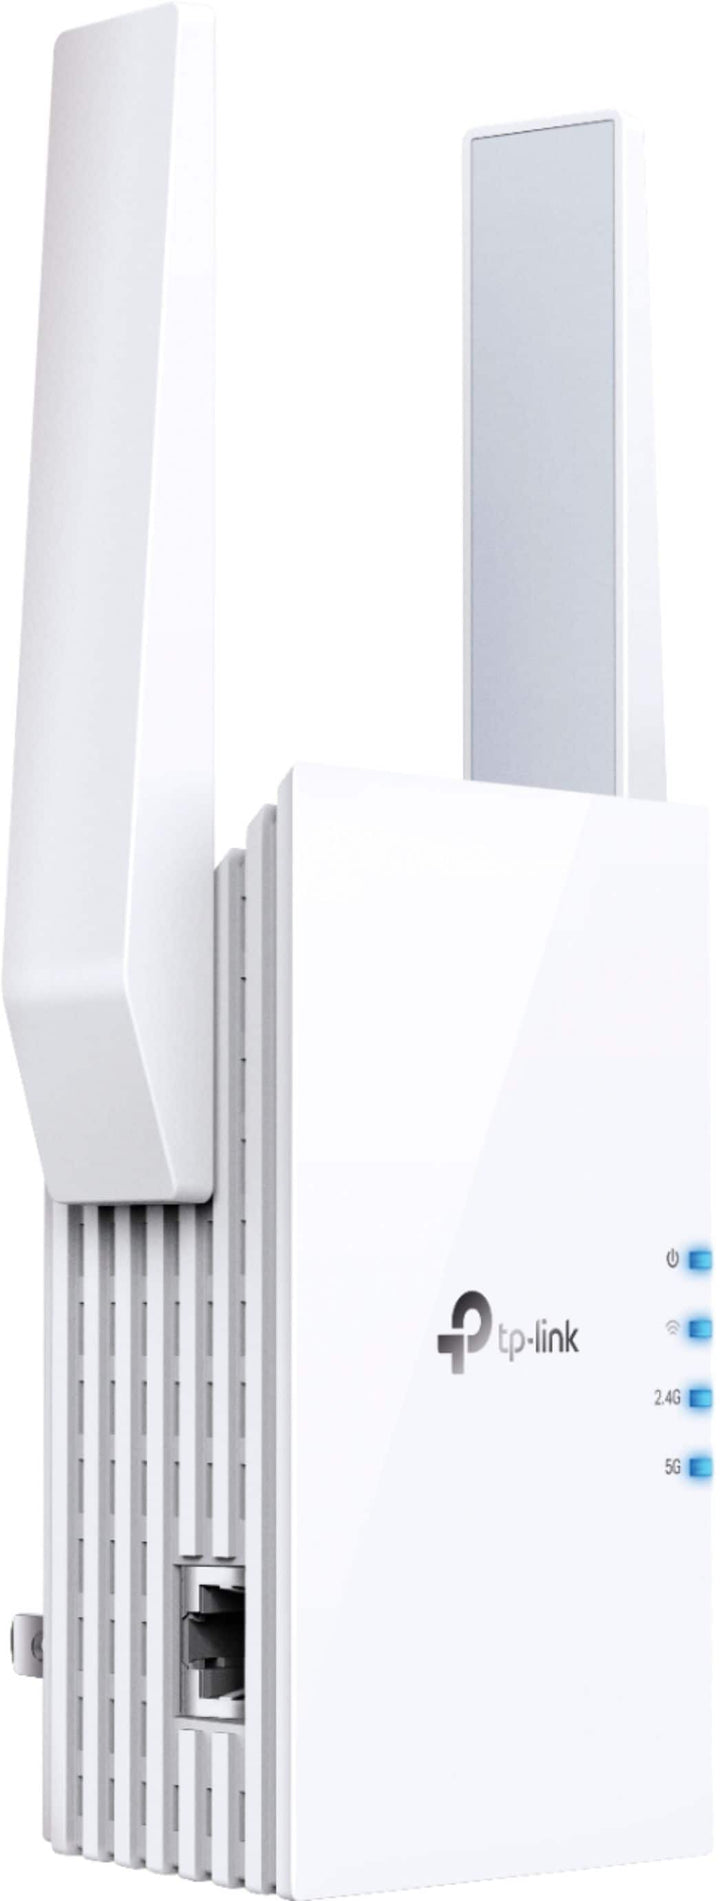 TP-Link - RE605X AX1800 Wi-Fi 6 Range Extender - White_1